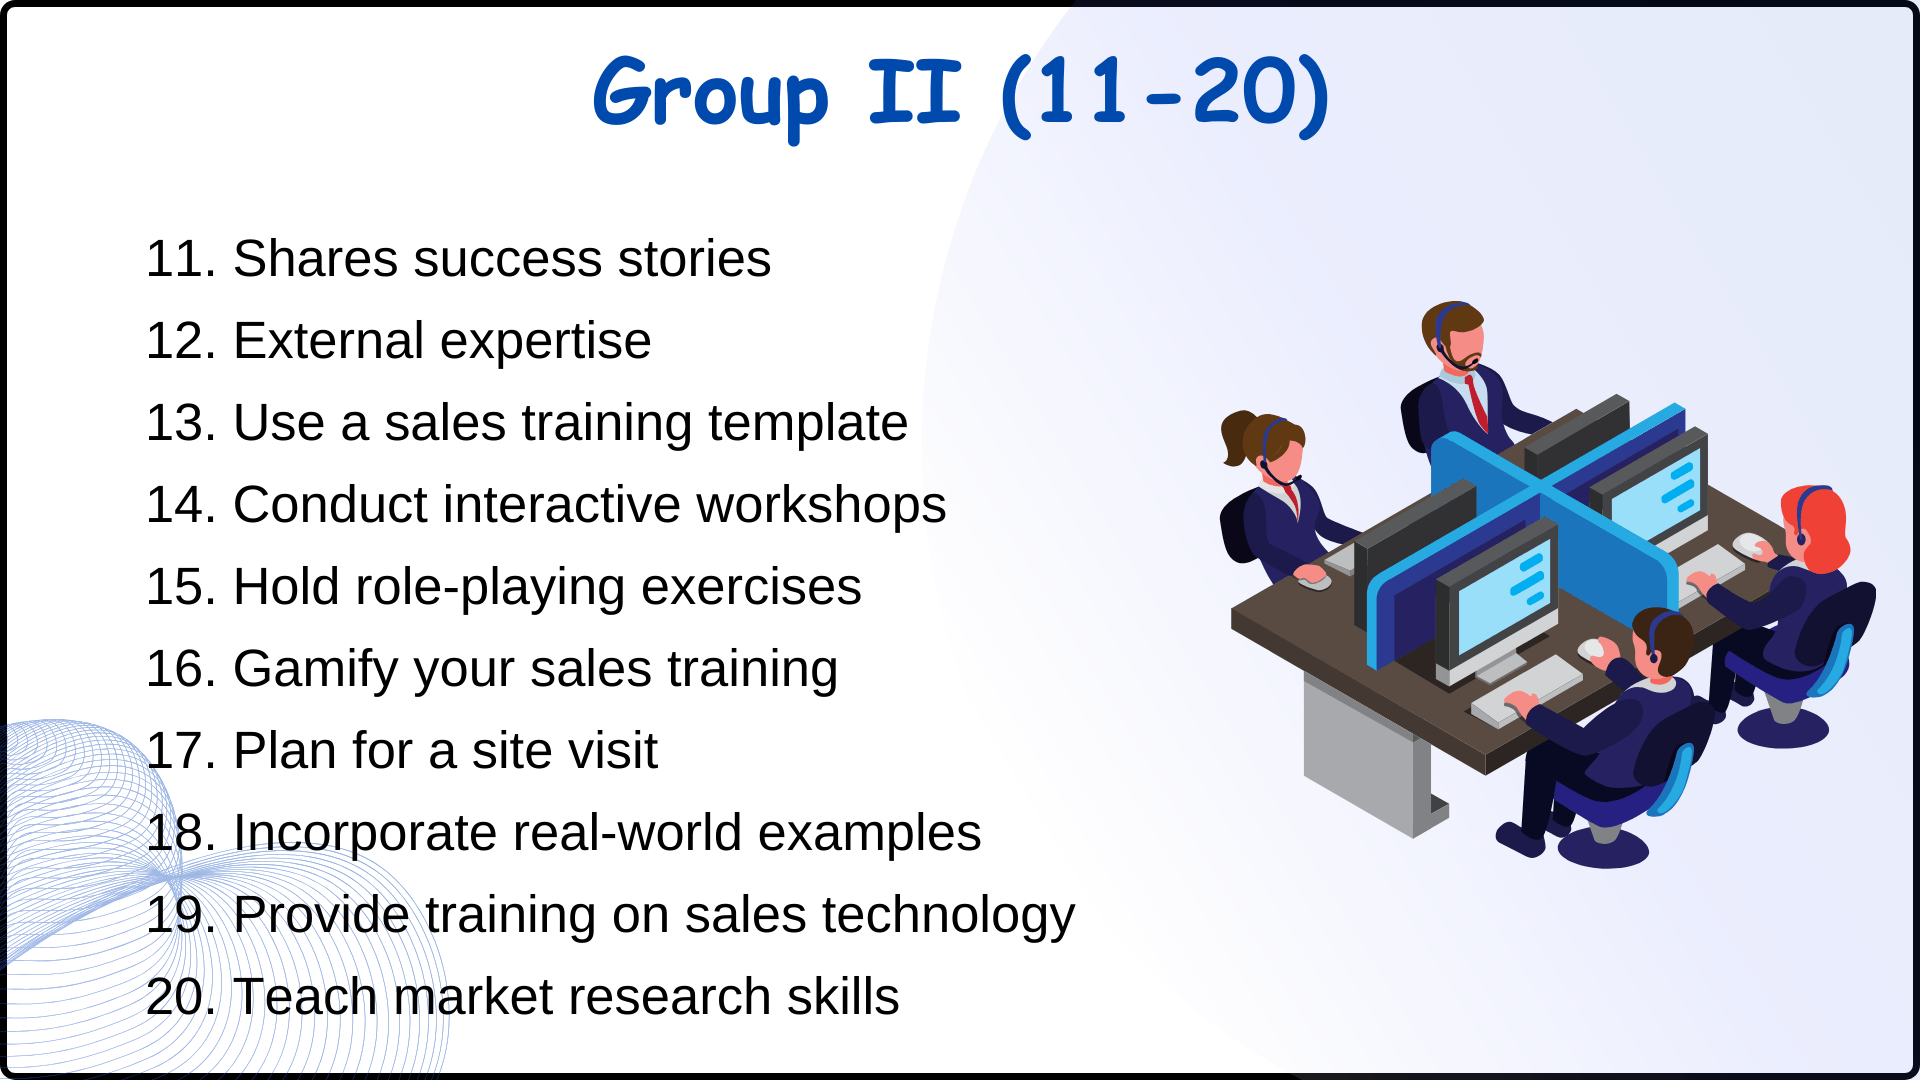 Sales training ideas Part-2